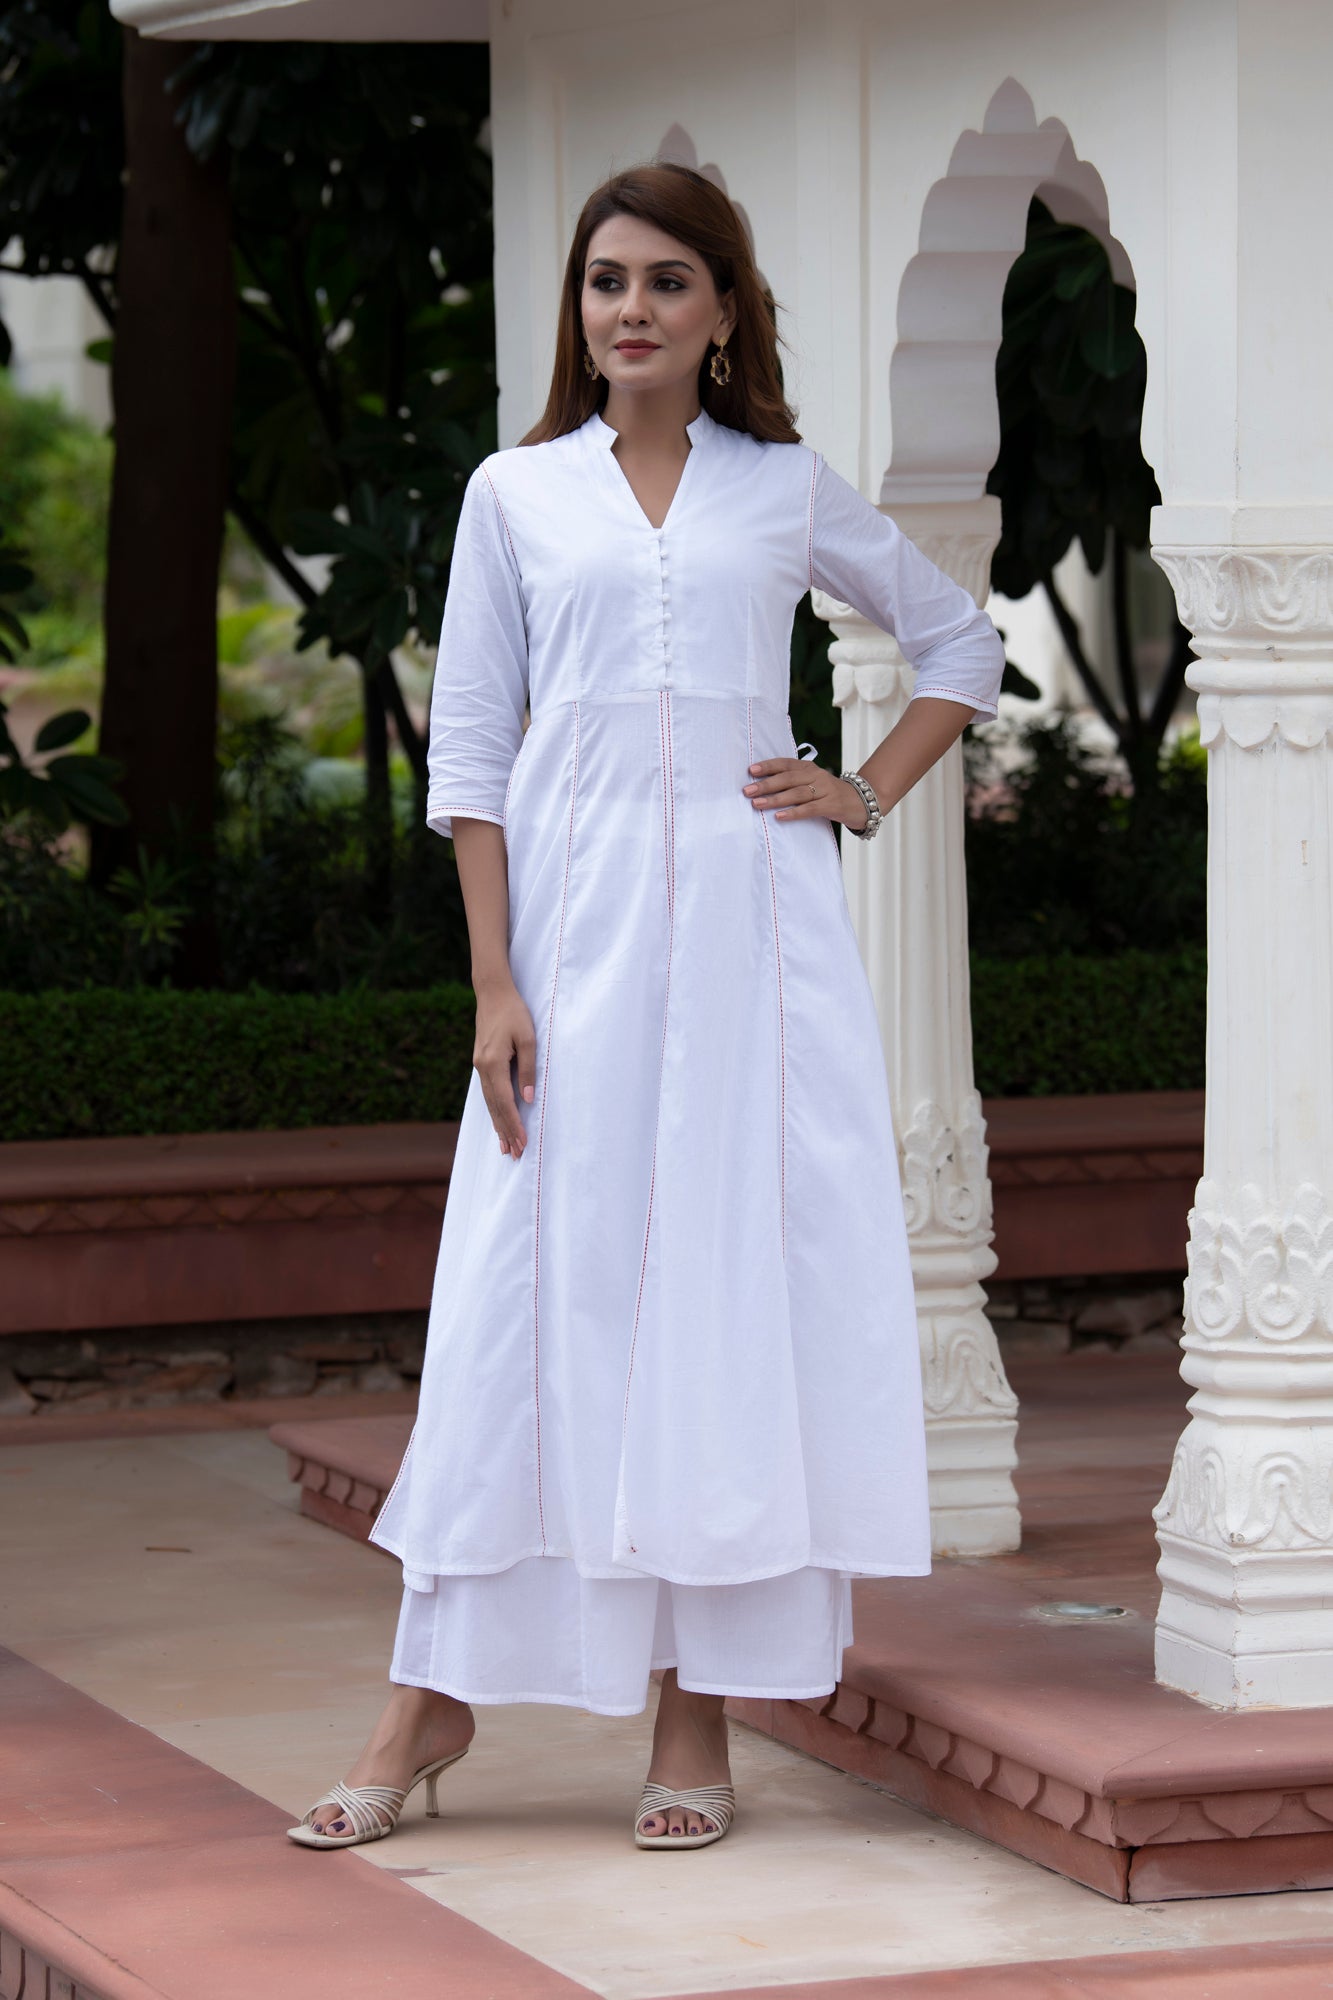 Buy fabcoast Women's Plain White Pathani Fancy Regular Fit Cotton 3/4  Sleeve Casual High Neck Traditional Kurta | Women's Ethnic Wear, Pathani  Kurta for Women. (Small) at Amazon.in